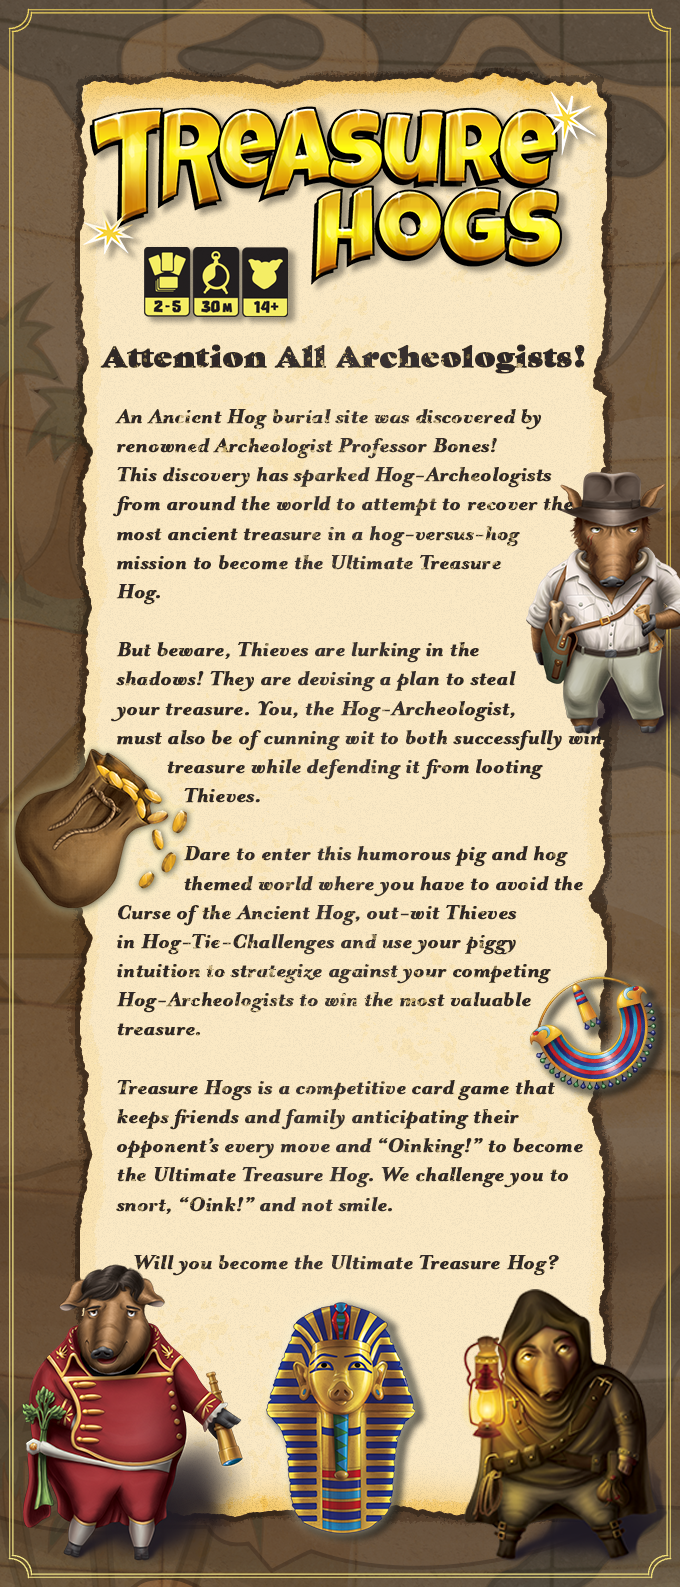 Treasure Hogs Introduction